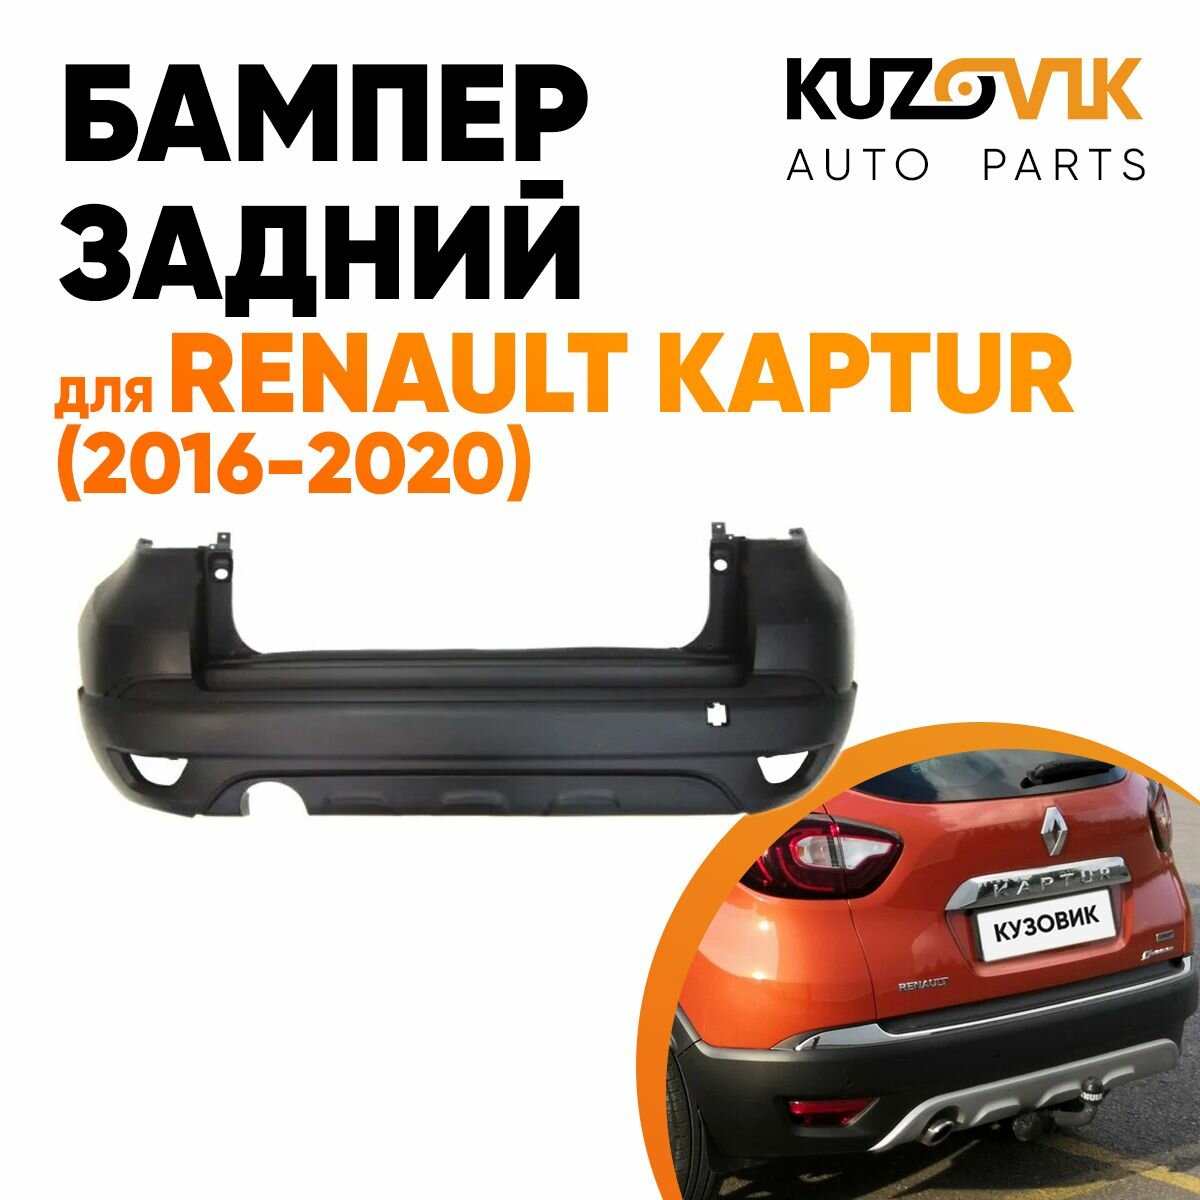 Бампер задний для Рено Каптюр Renault Kaptur (2016-2020)